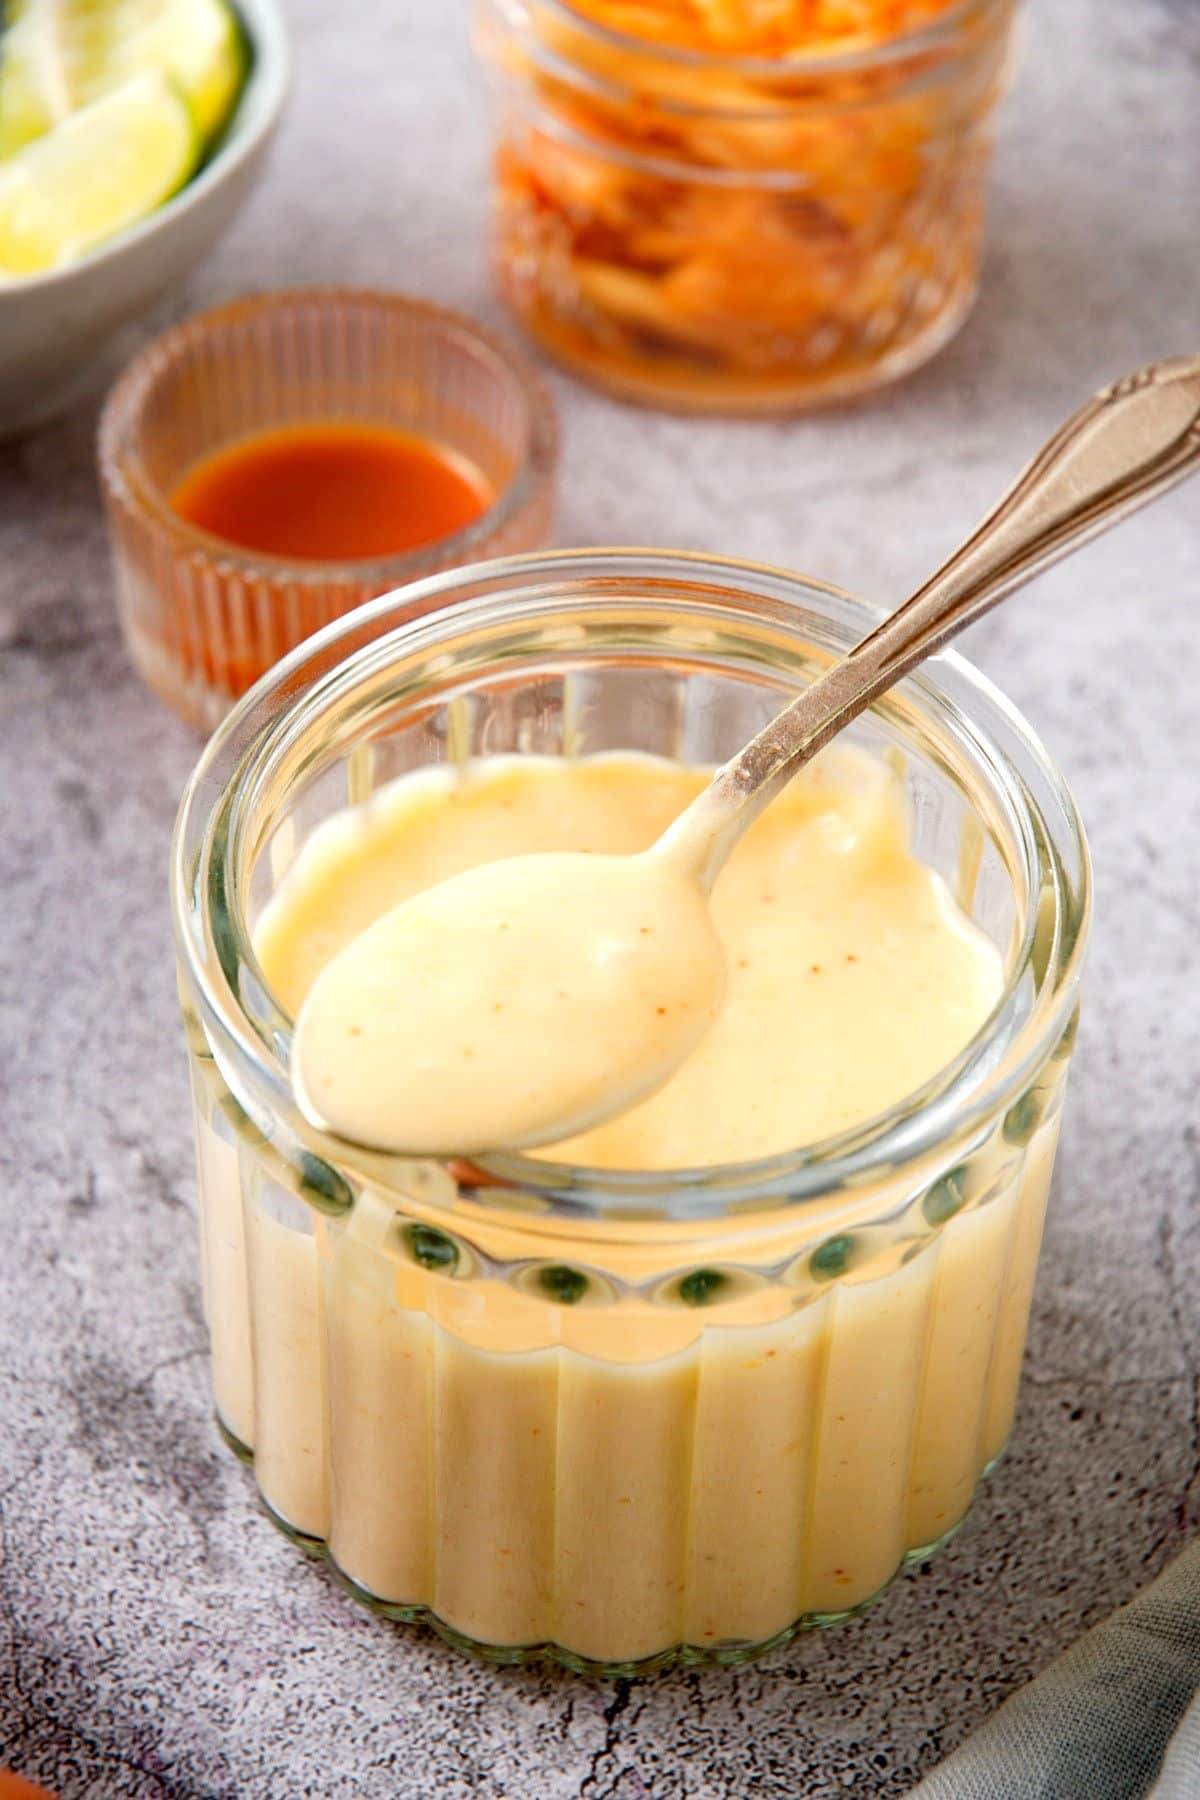 Homemade mayo in jar.